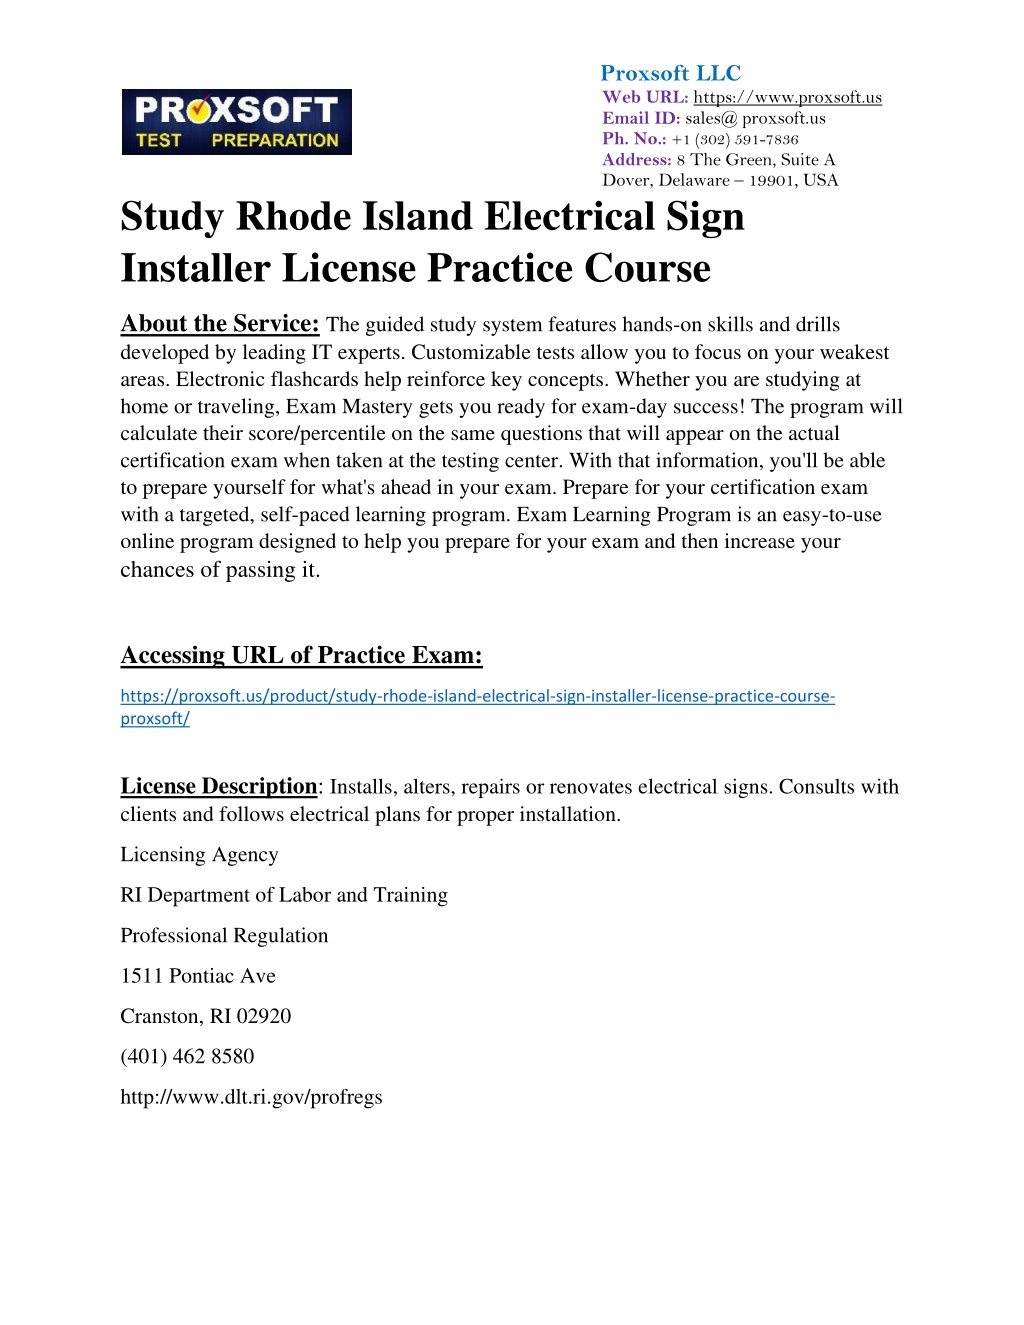 Rhode Island residential appliance installer license prep class free